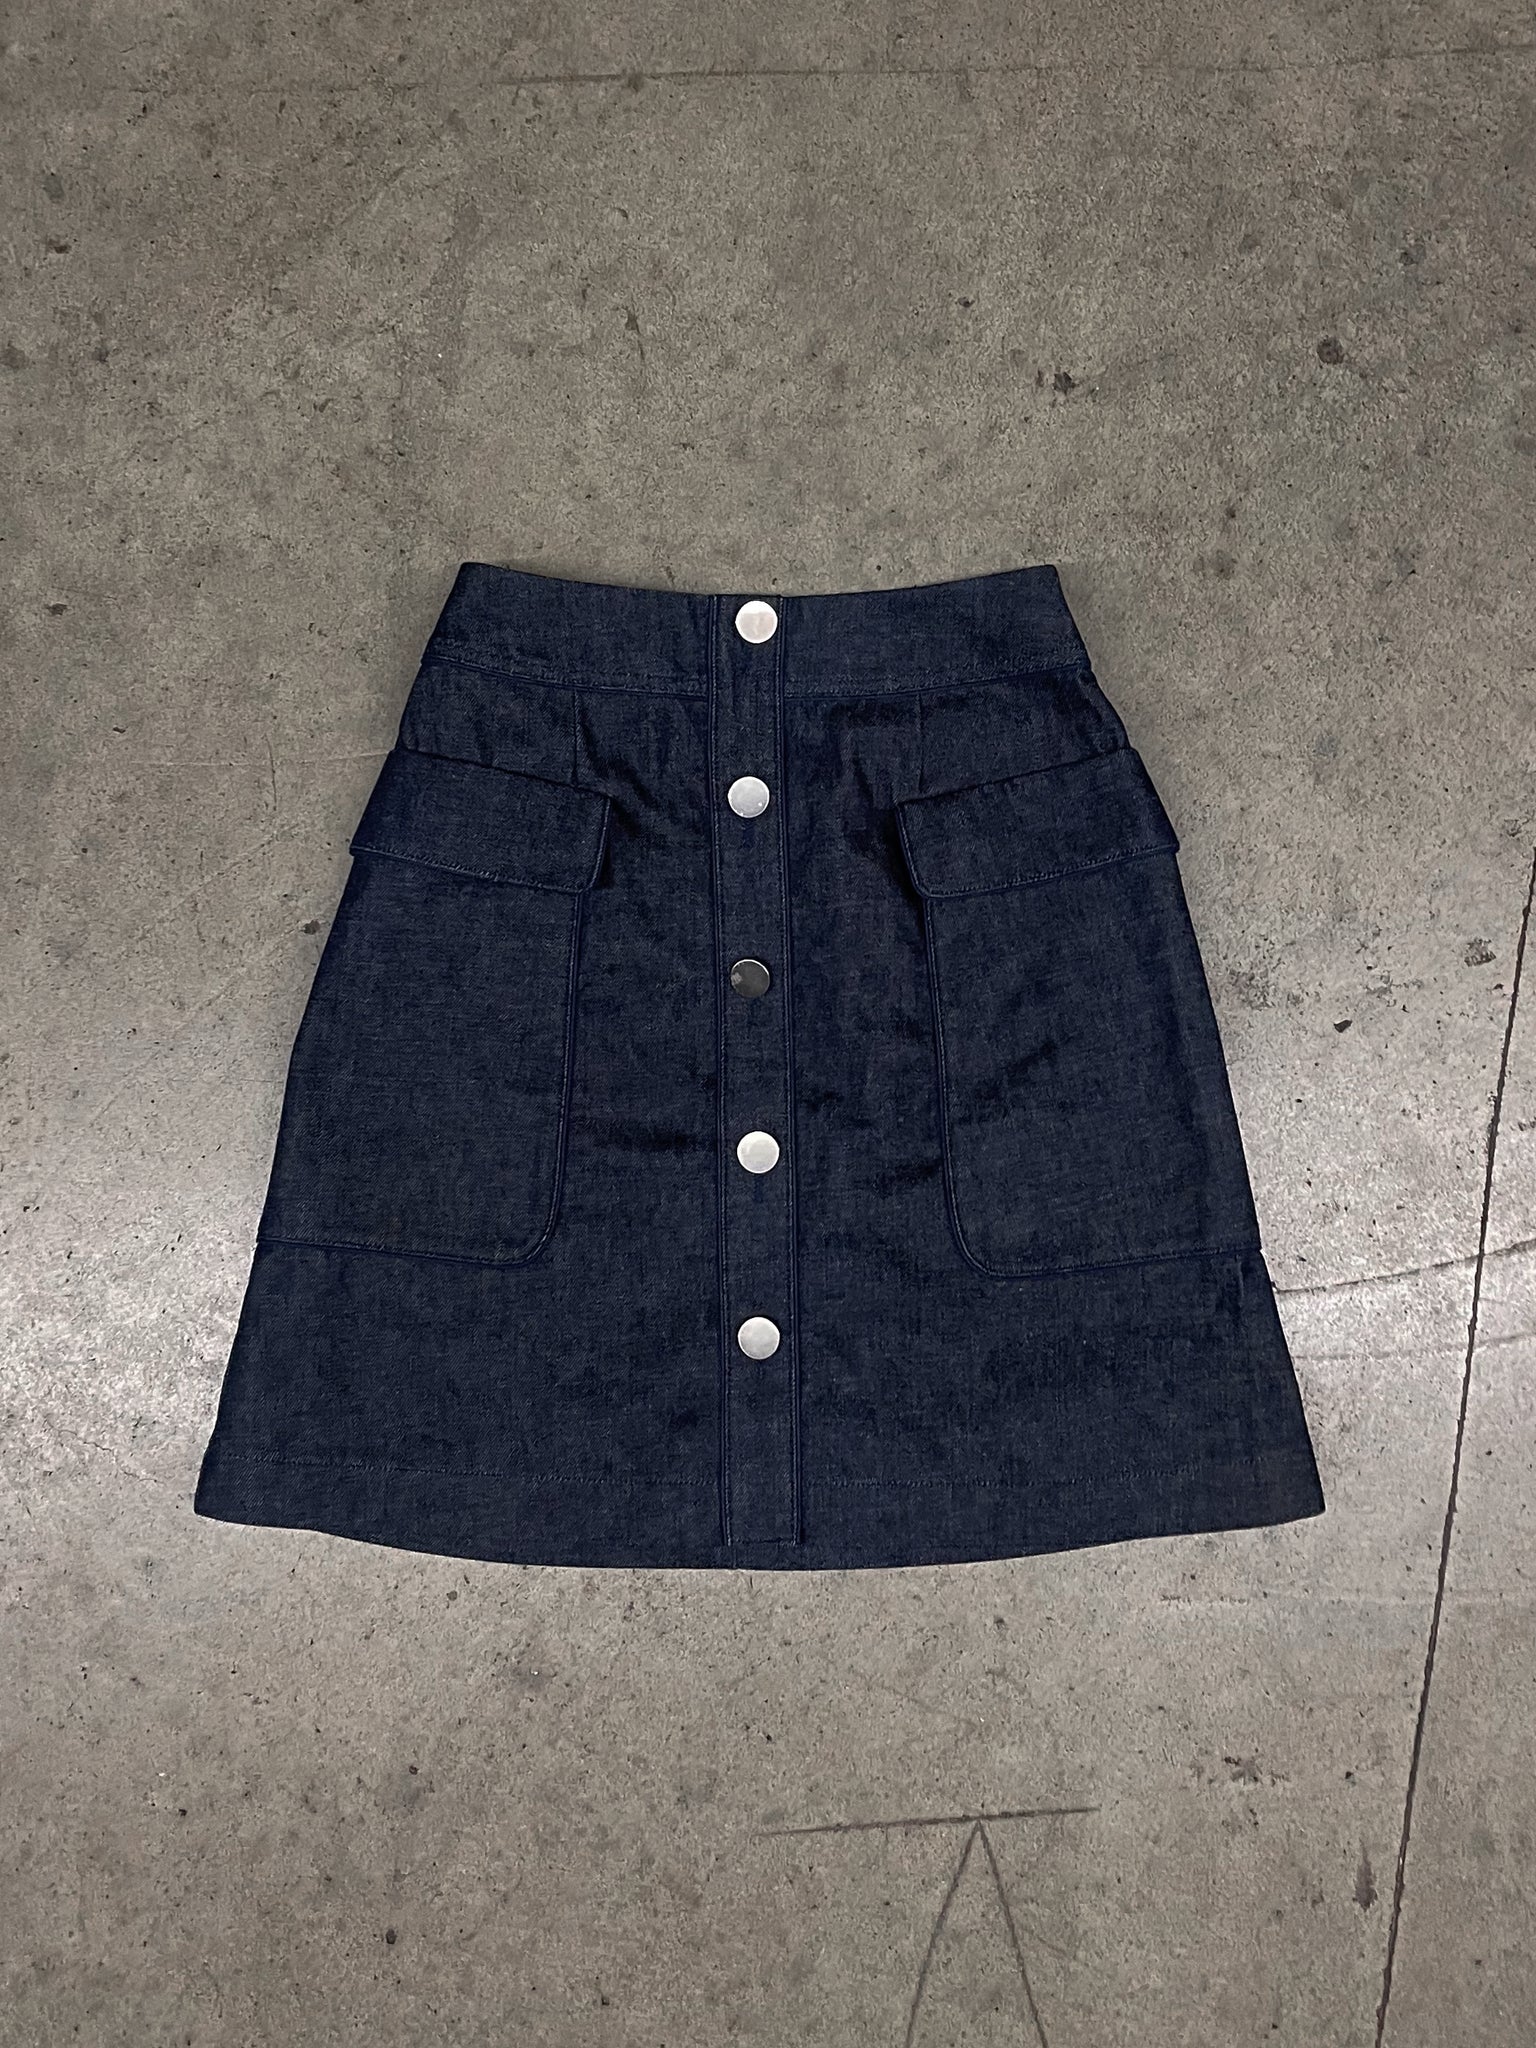 The Dayz Tokyo Denim Skirt / 25